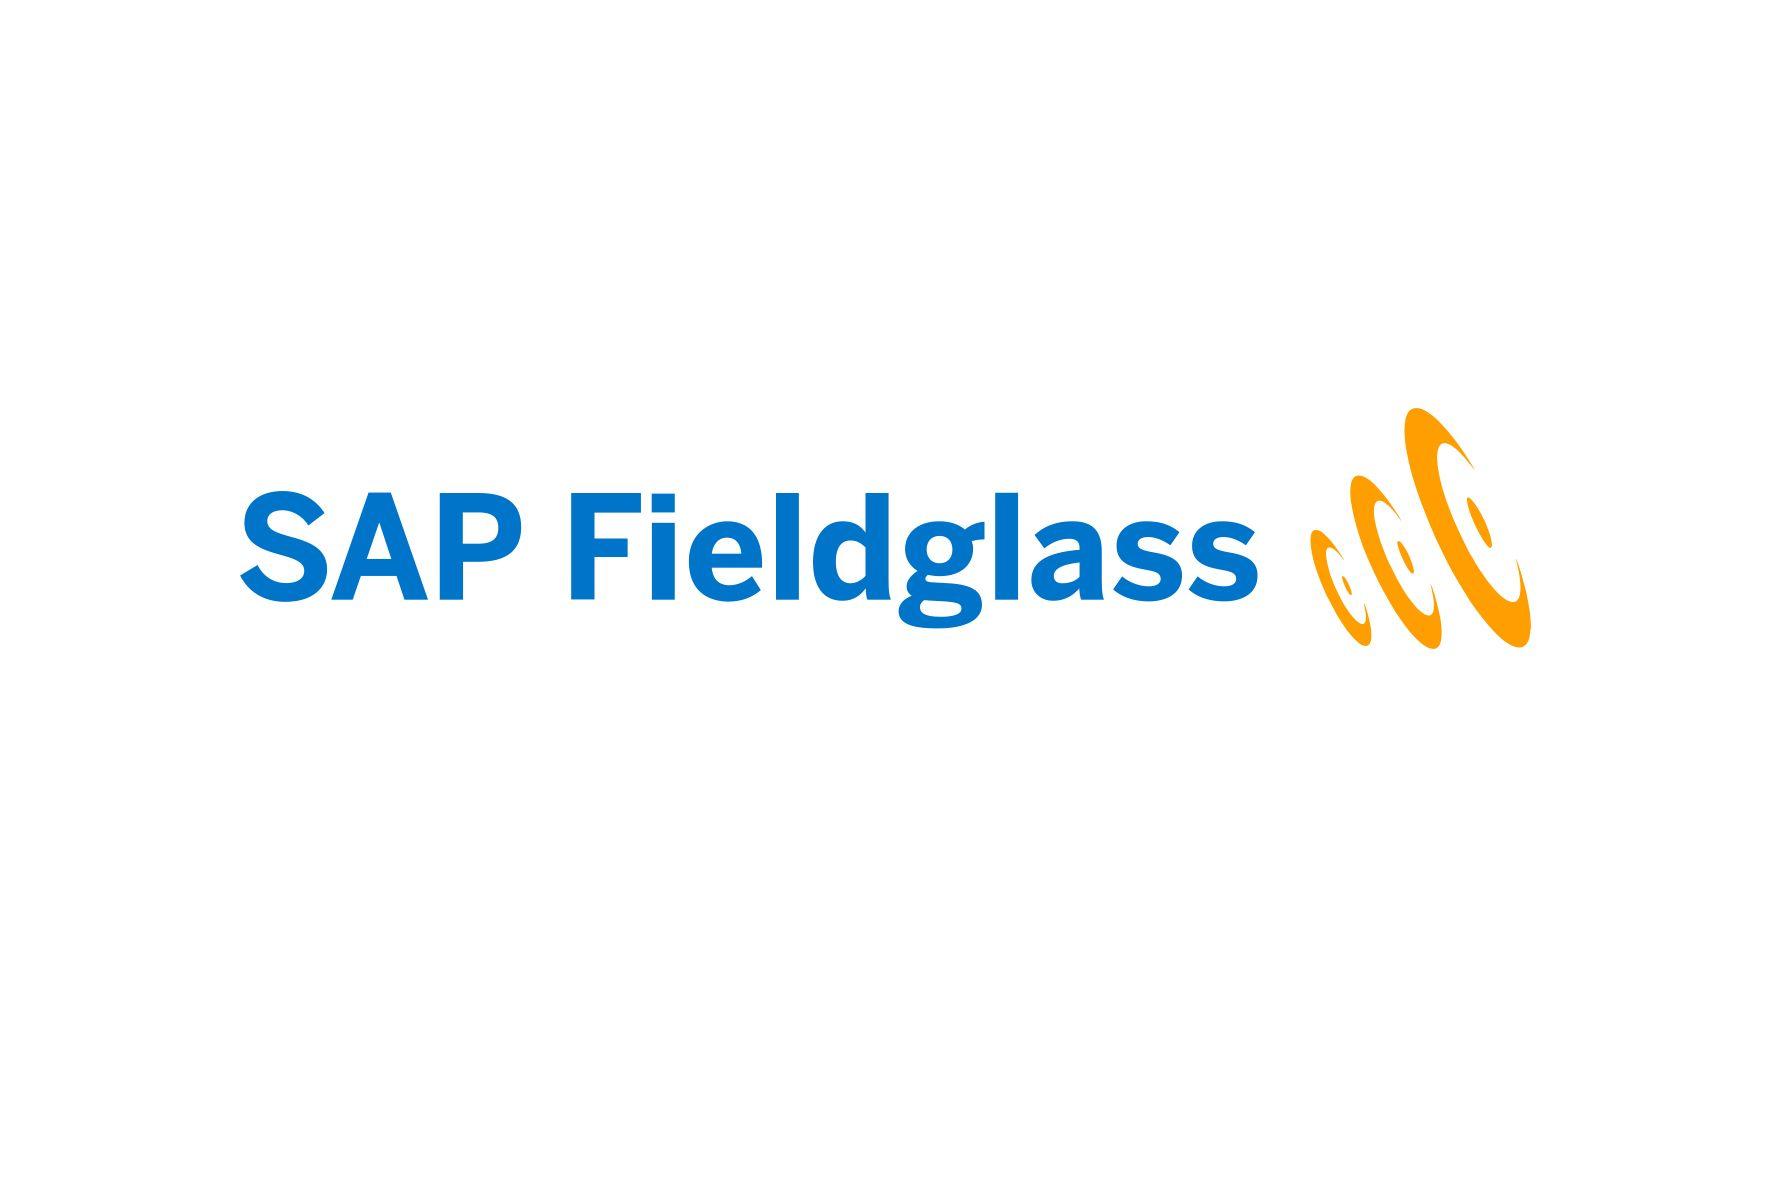 Fieldglass Logo - About ExceleratedS2P